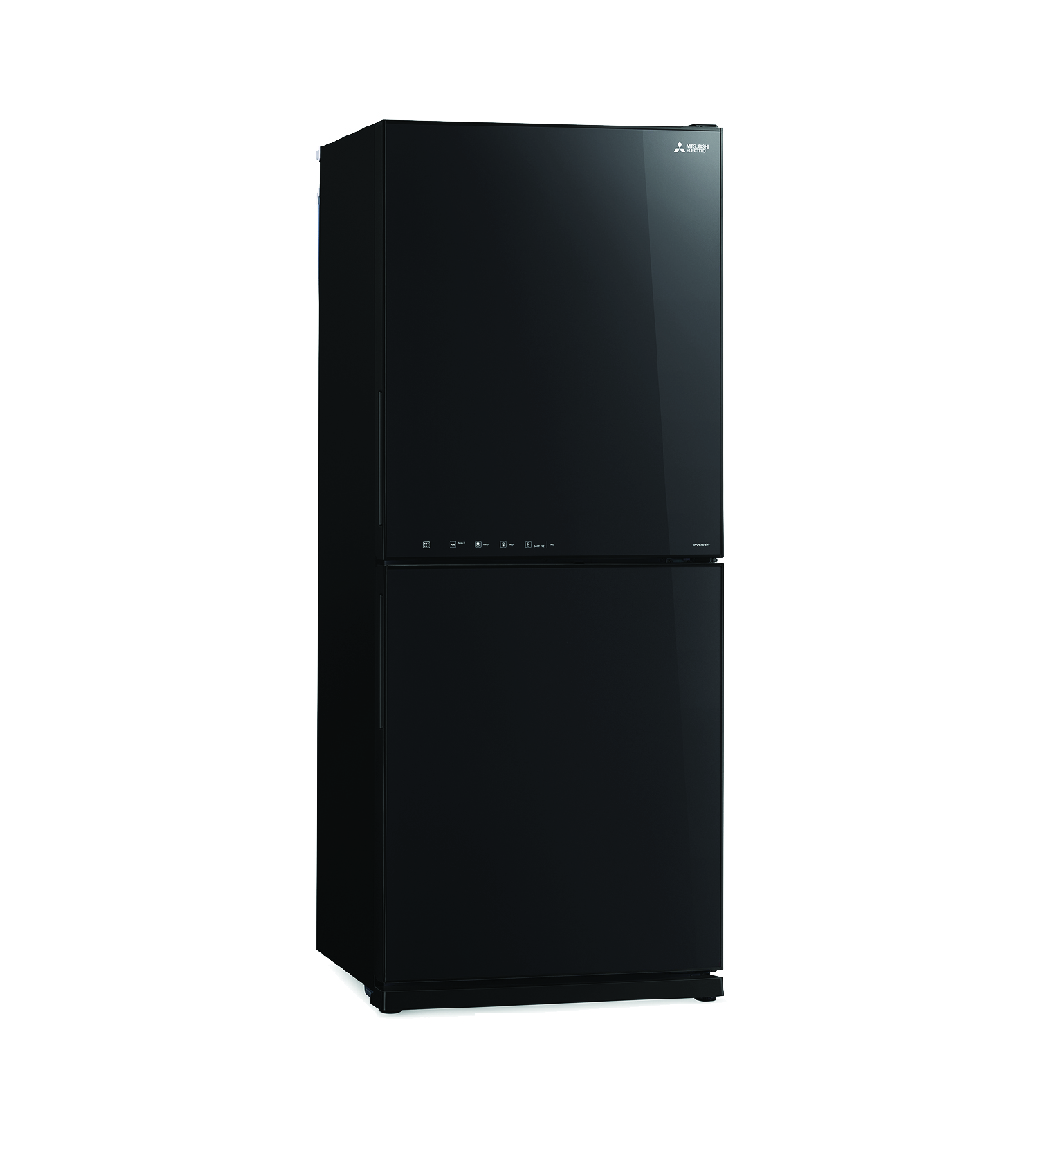 Mitsubishi Electric - Refrigerator